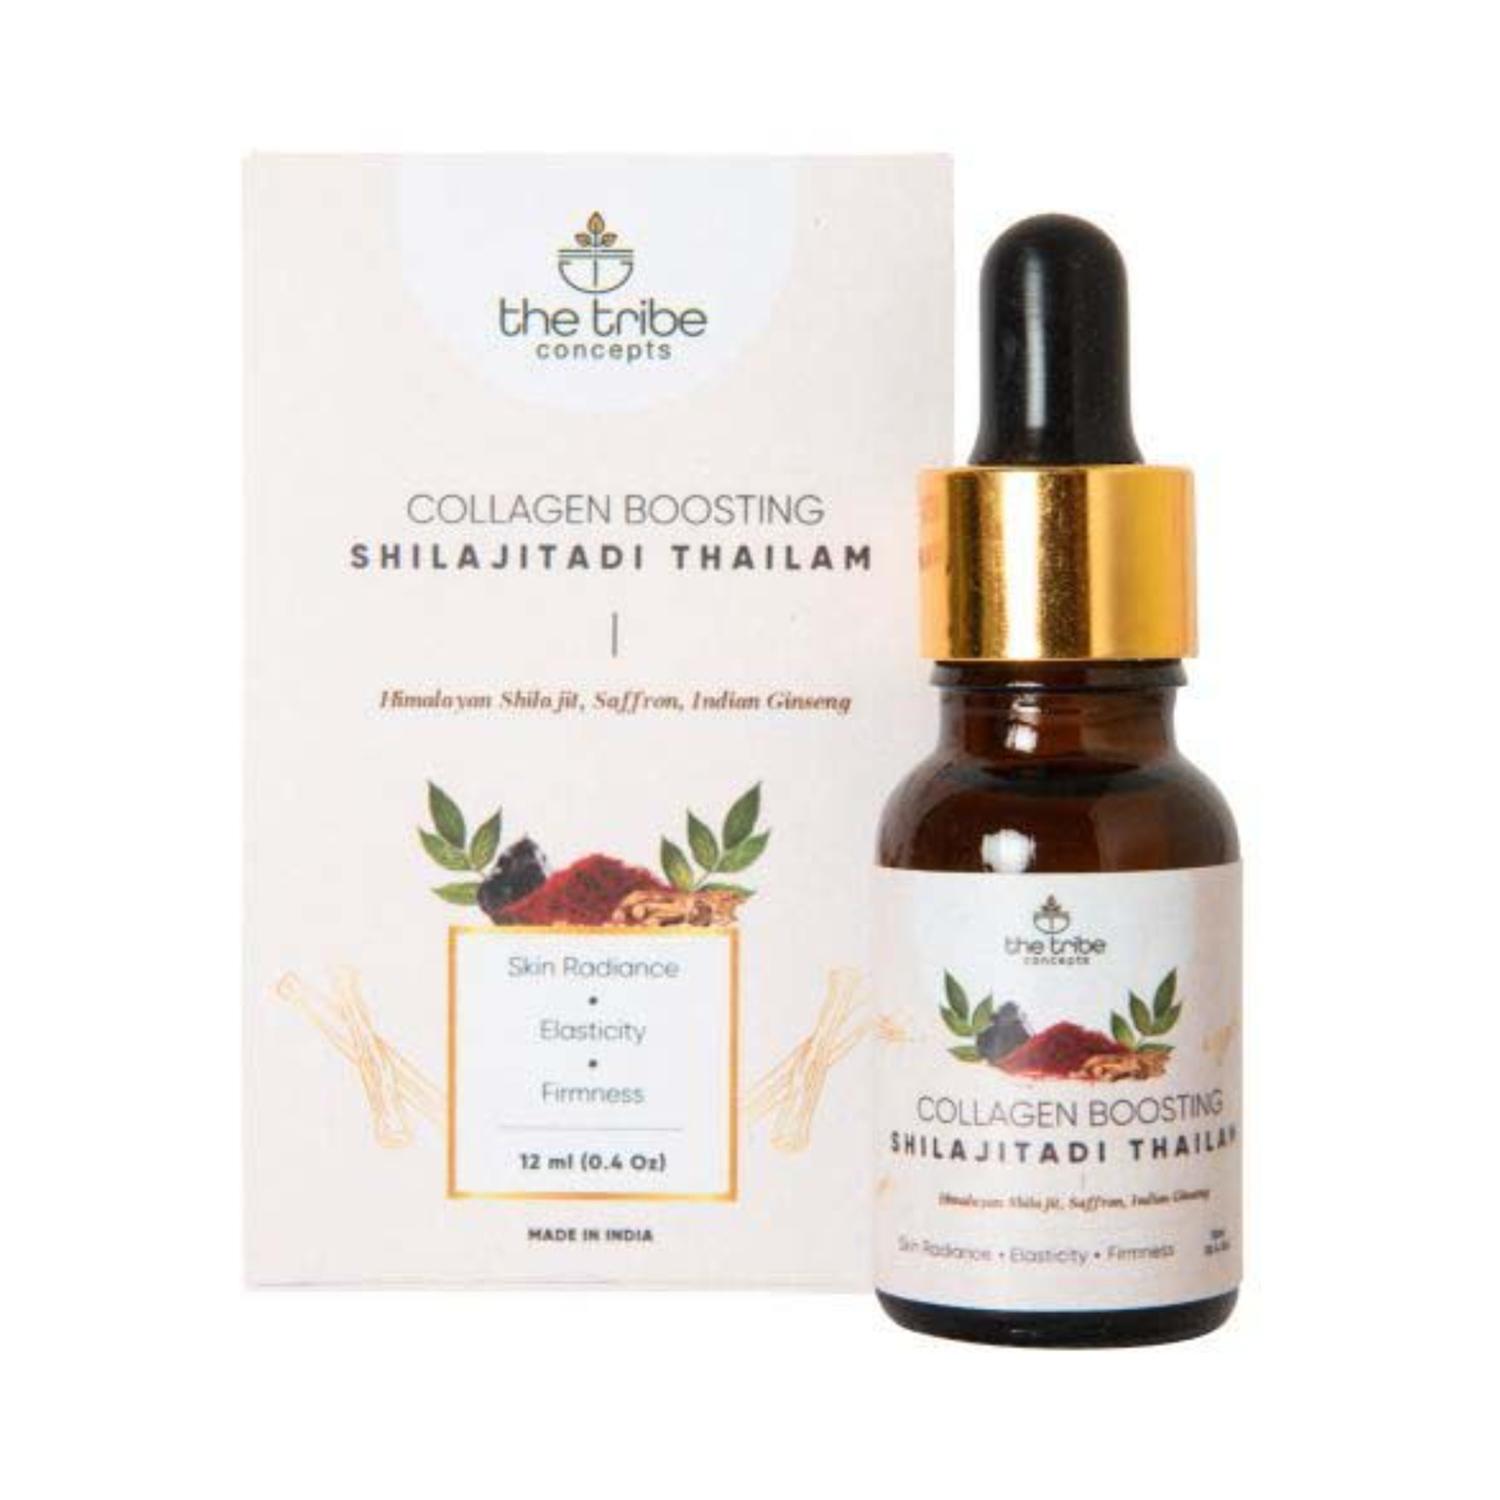 the tribe concepts collagen boosting shilajitadi thailam face oil (12ml)